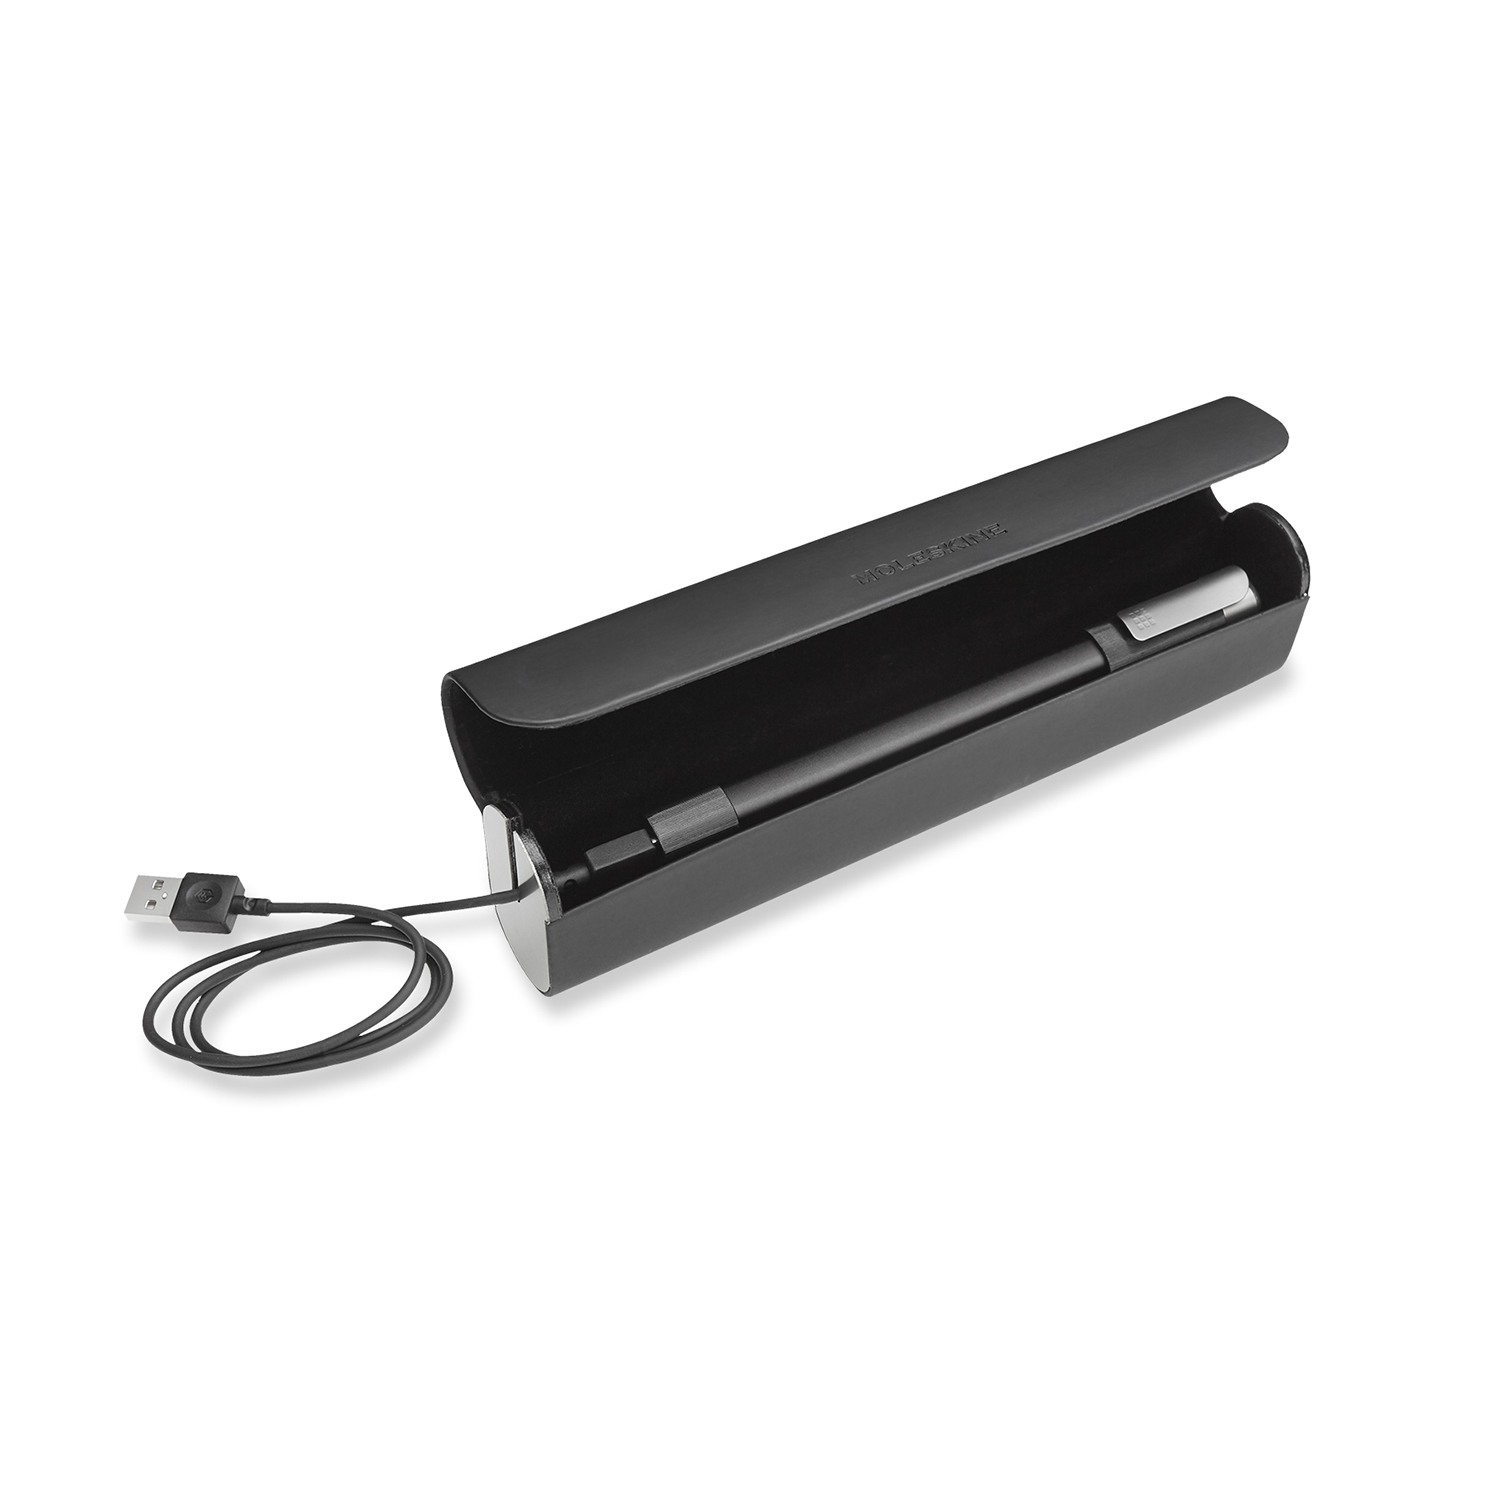 Penar - Moleskine, Smart pen case black rubber | Moleskine